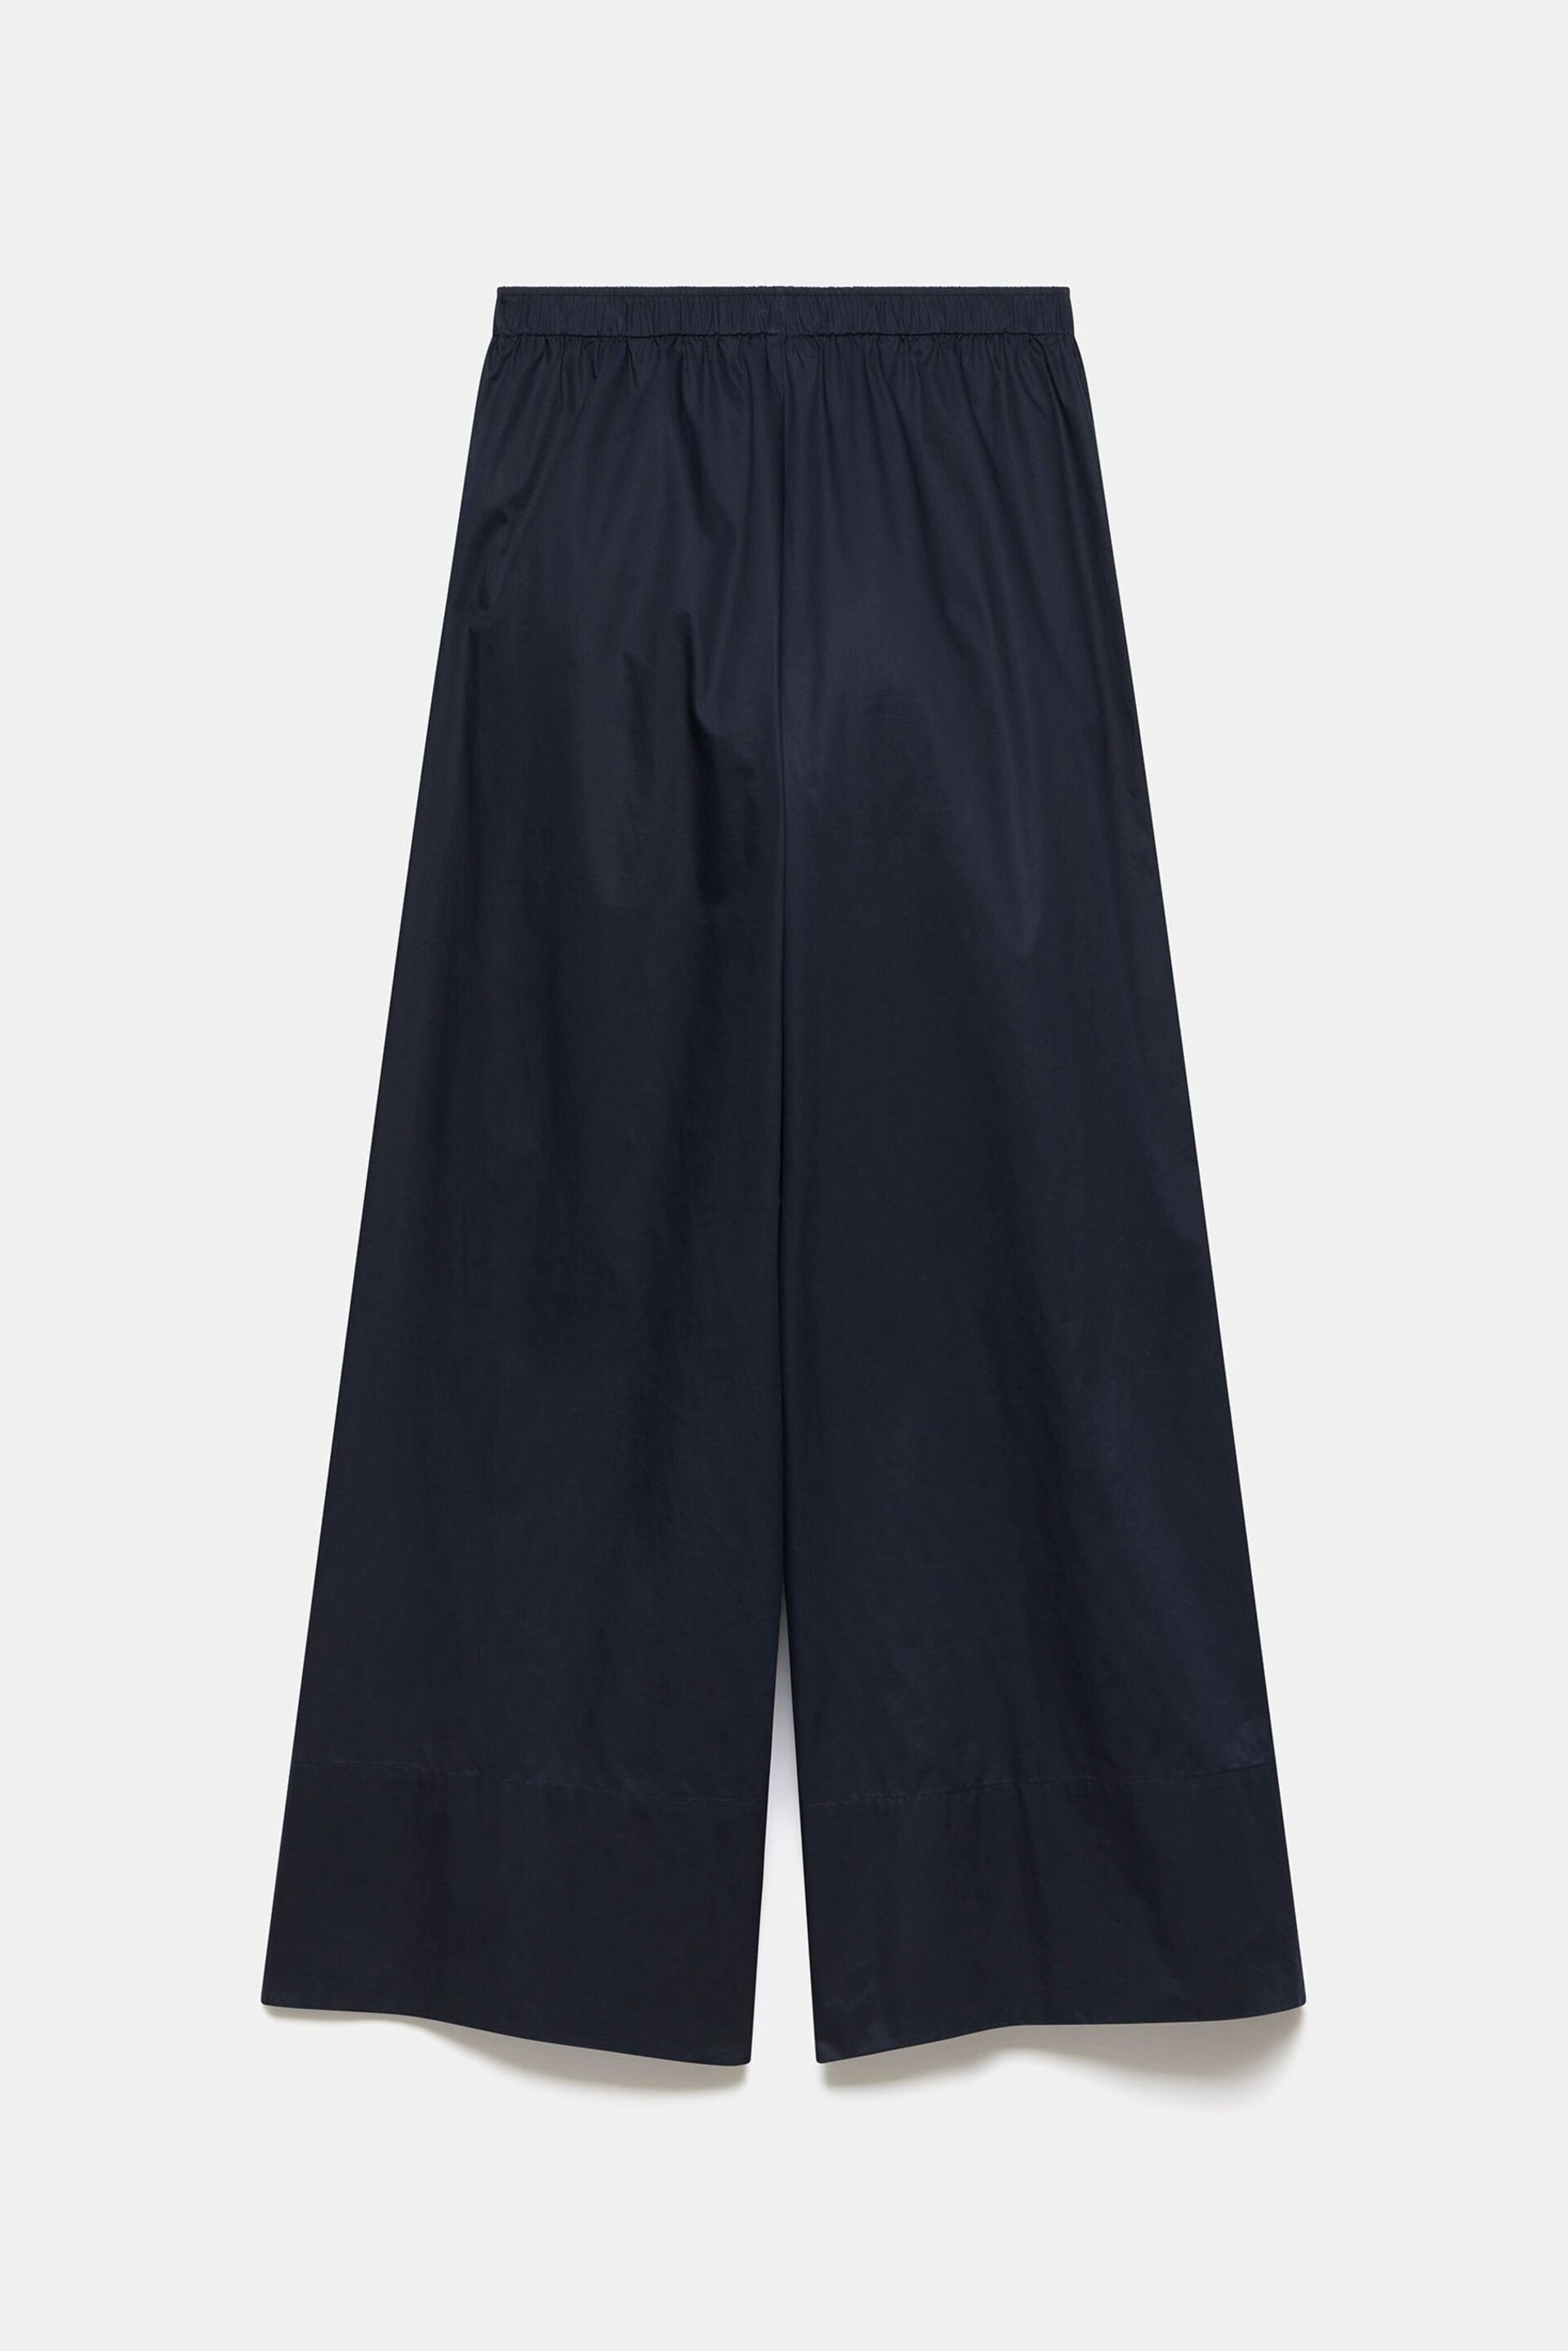 Mint Velvet Blue Cotton Wide Trousers - Image 4 of 4